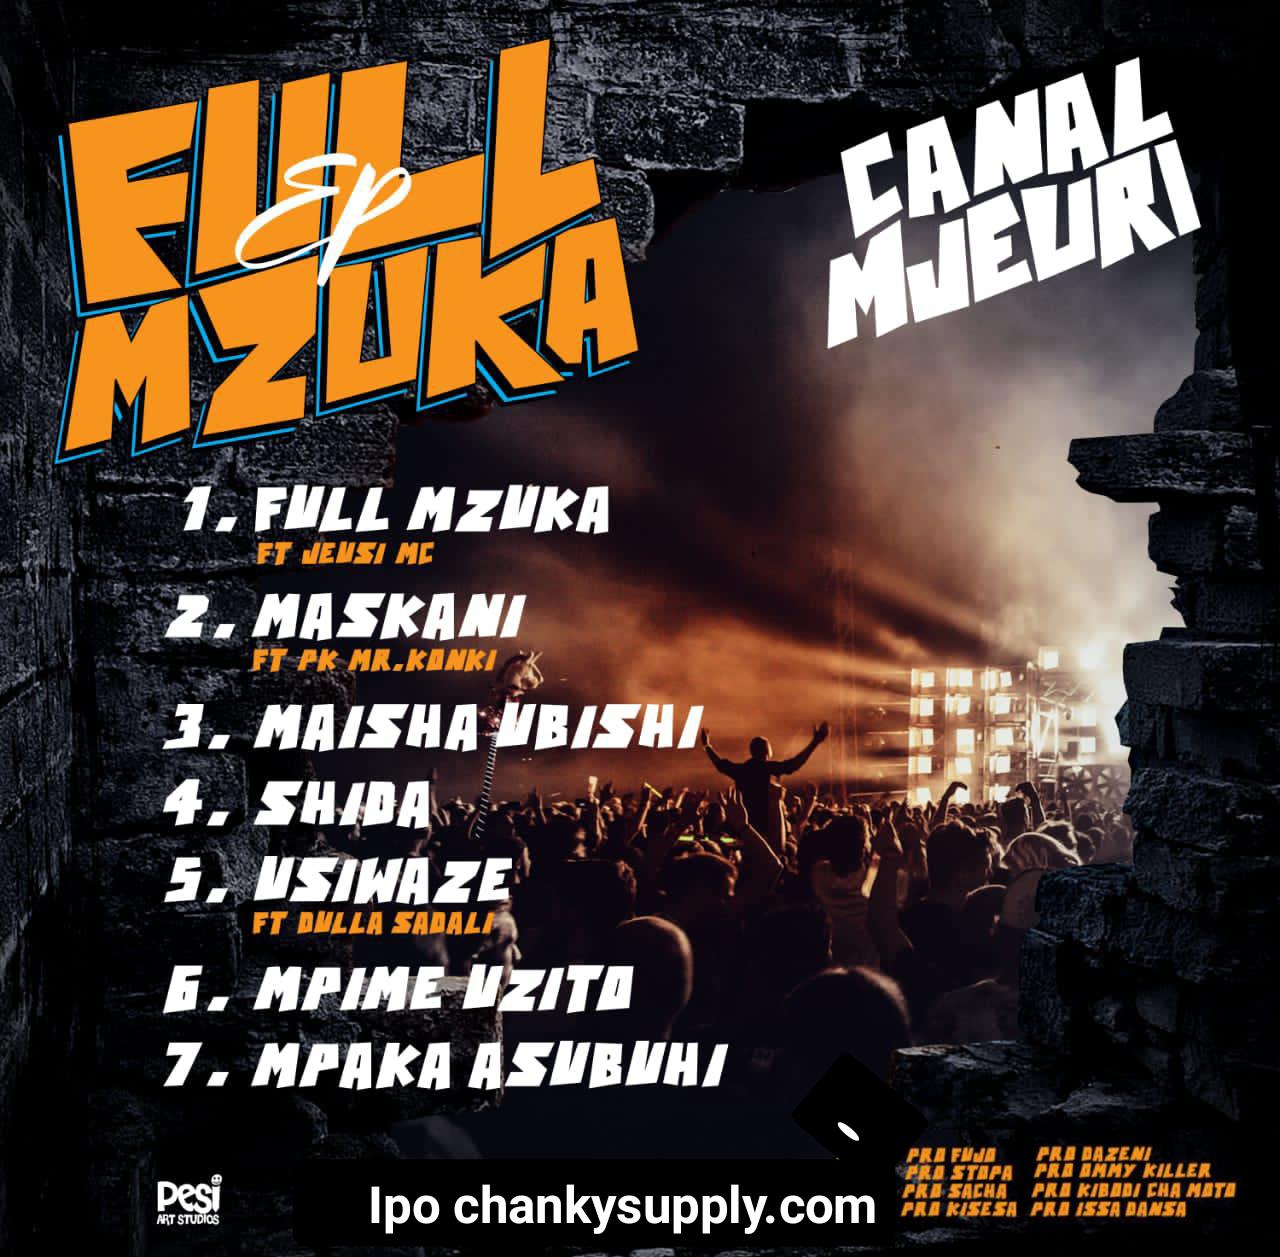 FULL ALBUM CANALI MJEURI MIZUKA WWW.CHANKYSUPPLY.COM